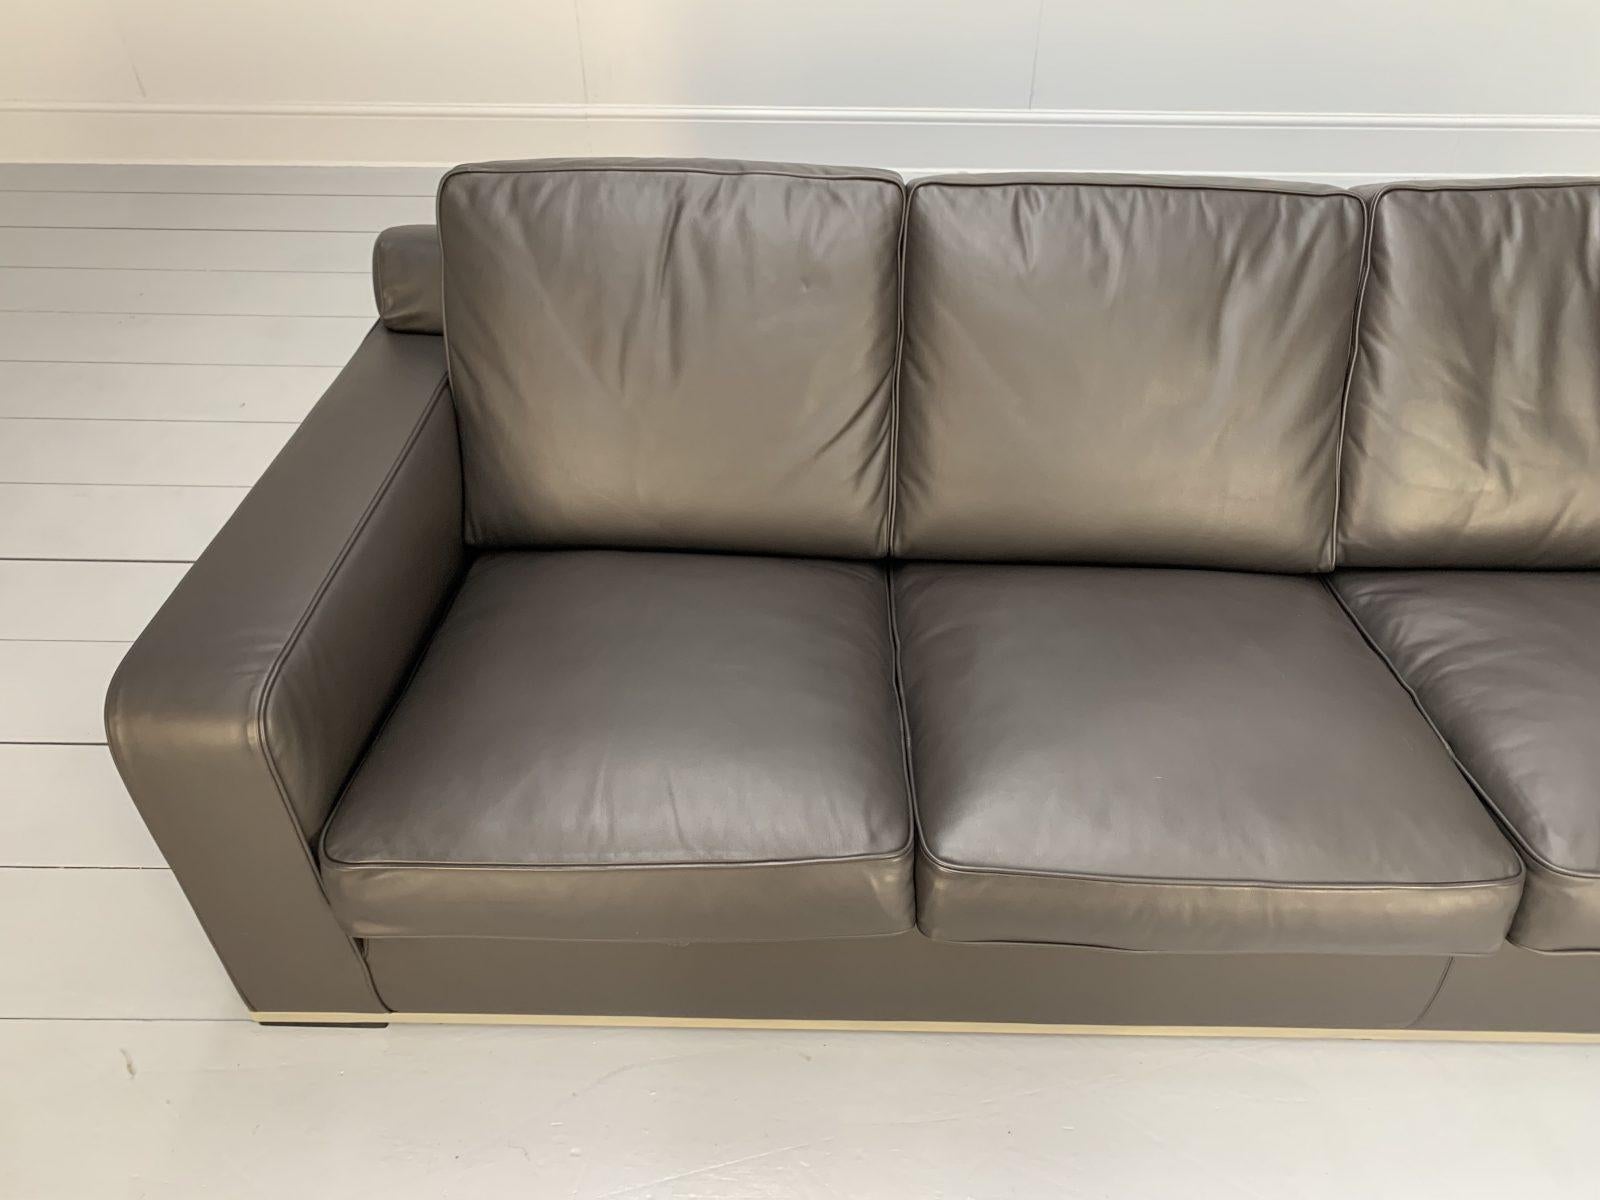 B&B Italia “Imprimateur Apta” 4-Seat Sofa in Dark Grey “Gamma” Leather For Sale 2